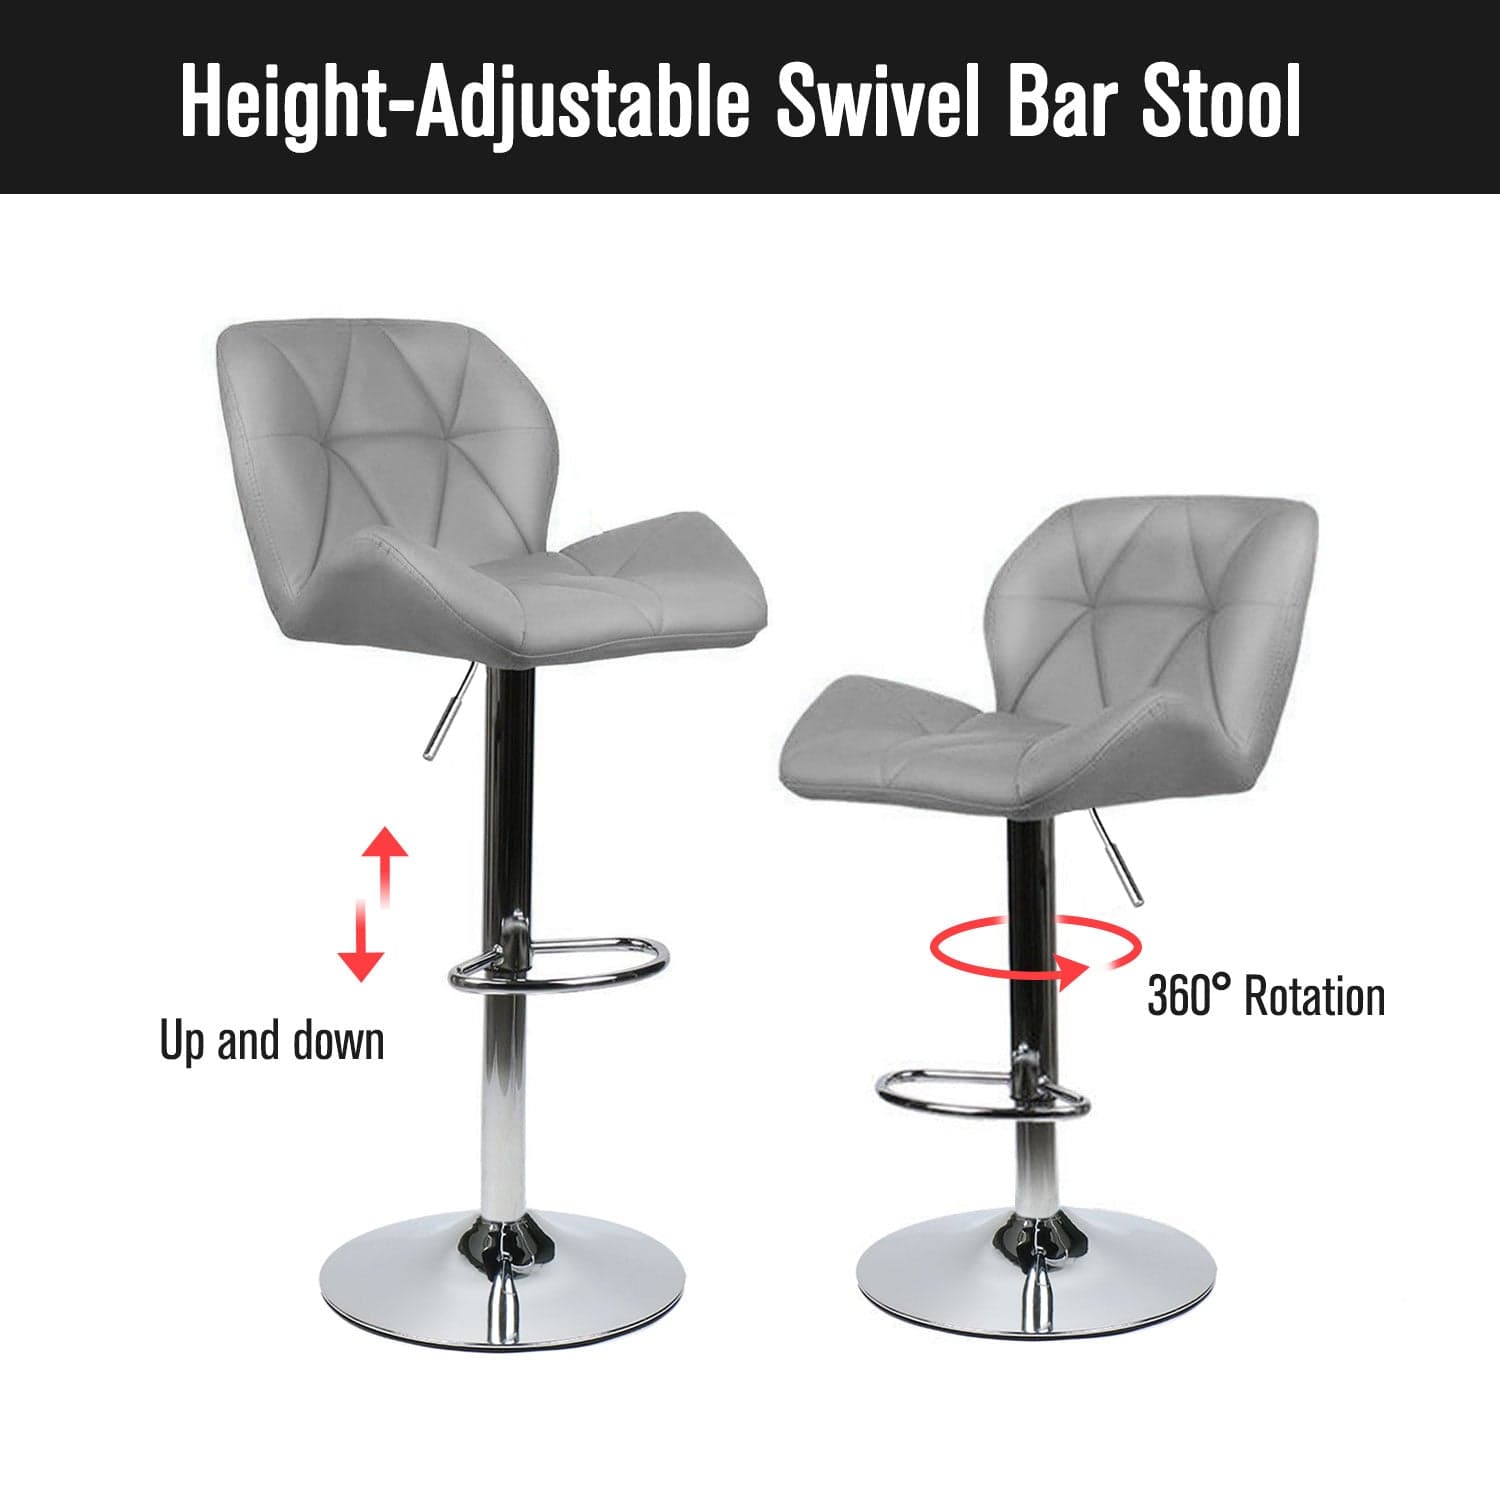 Elecwish Barstools Set of 2 Bar Stools OW001 are height-adjustable swivel bar stools